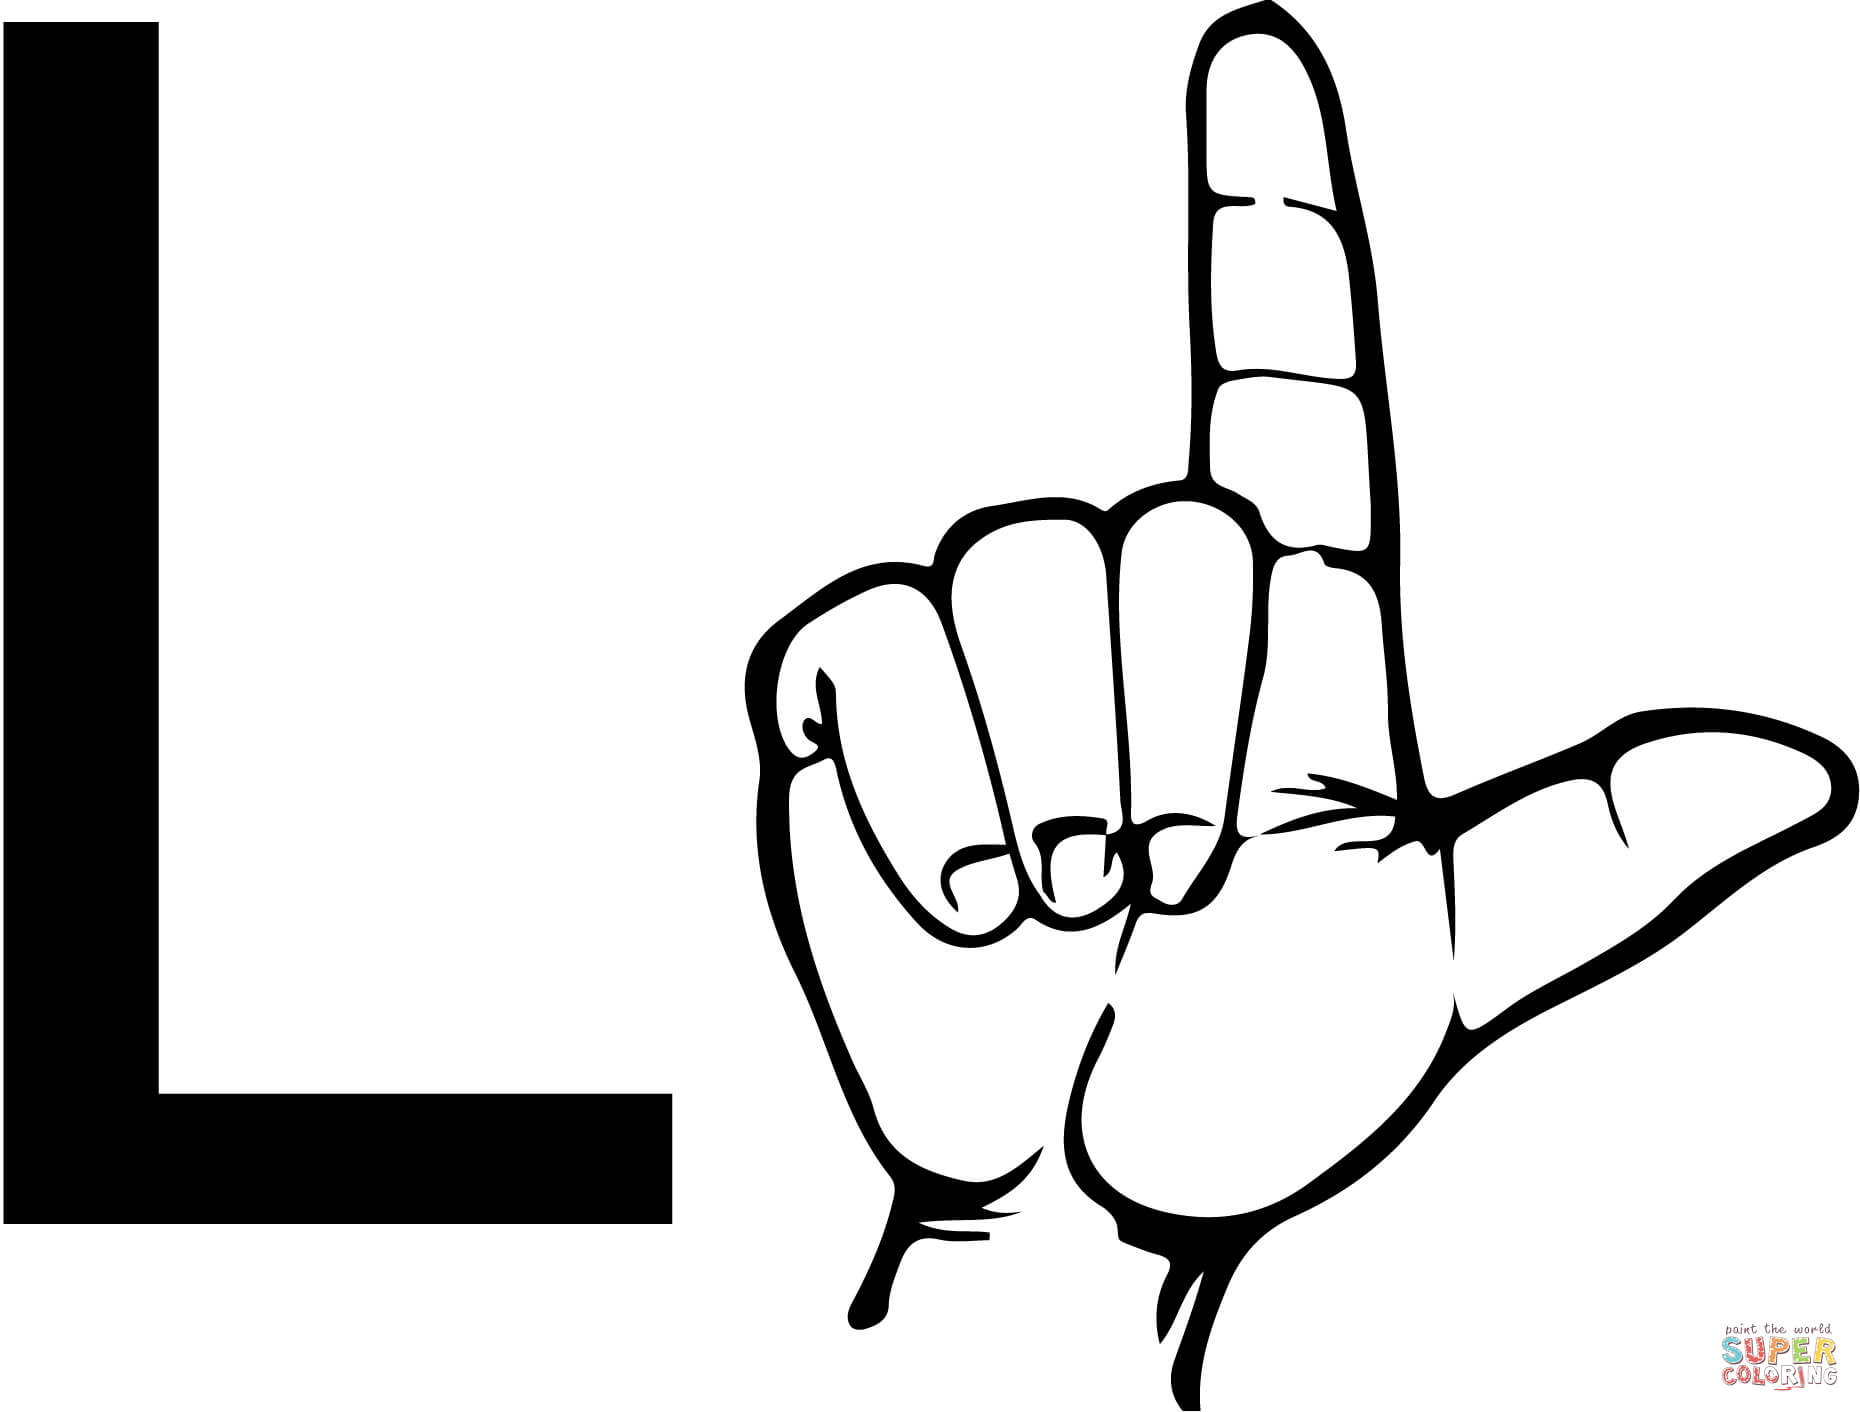 sign language clip art online free - photo #50